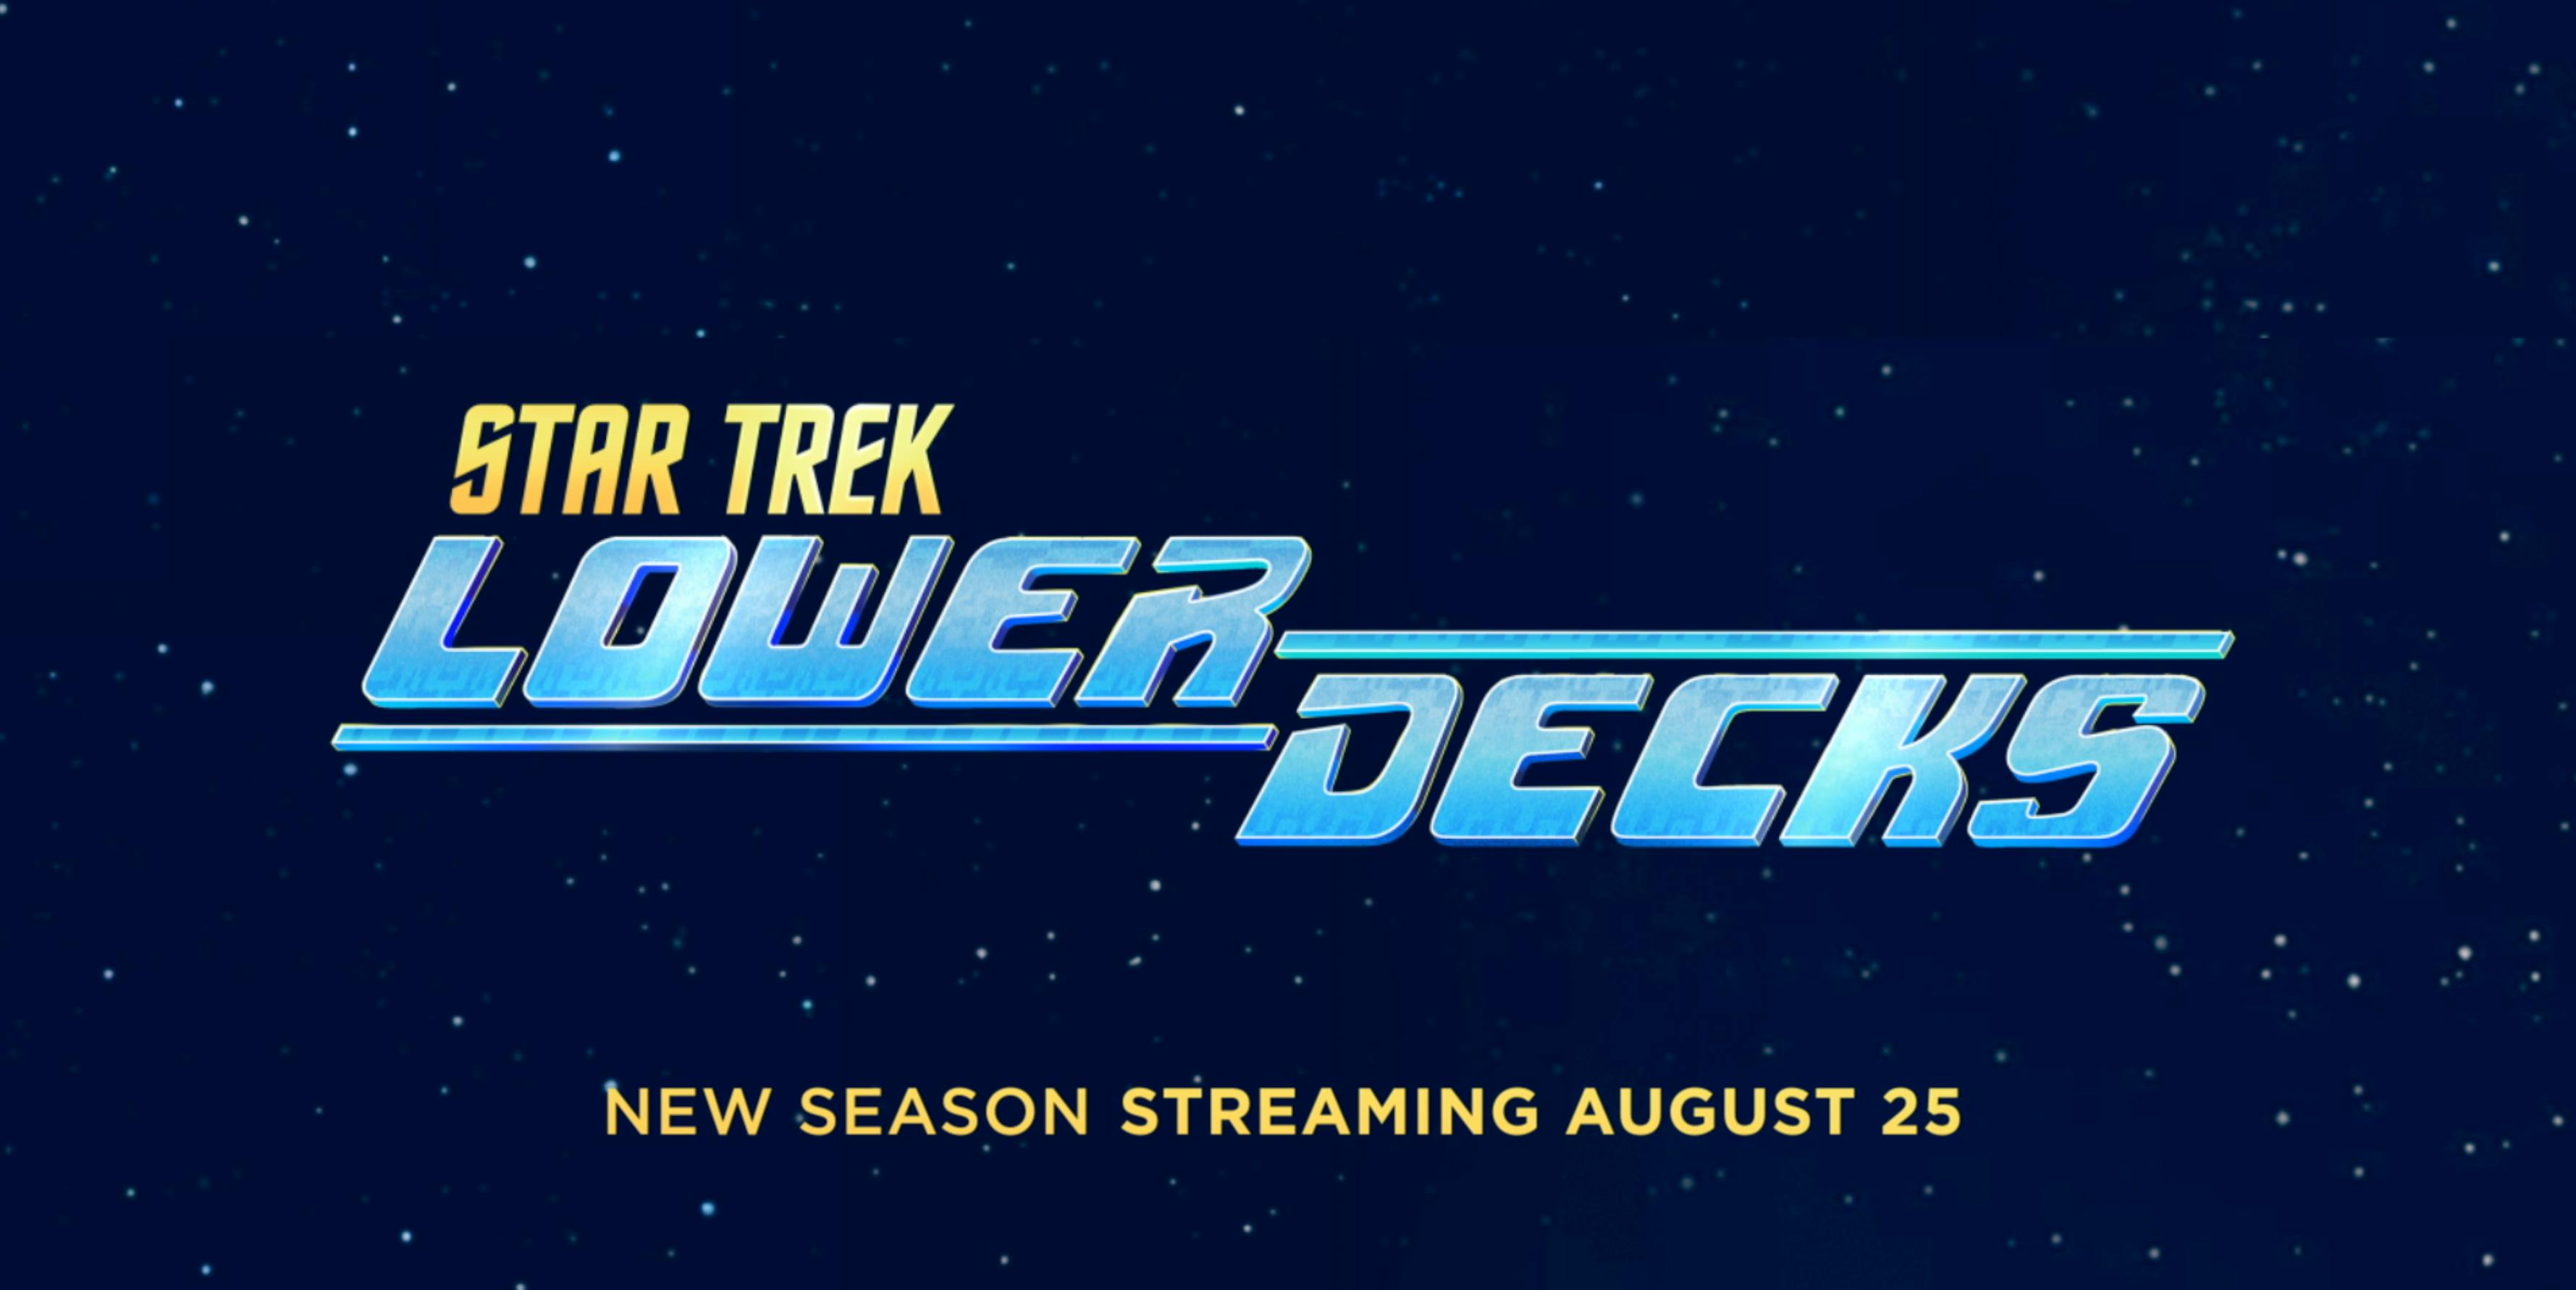 The title card from the Star Trek: Lower Decks season three trailer.